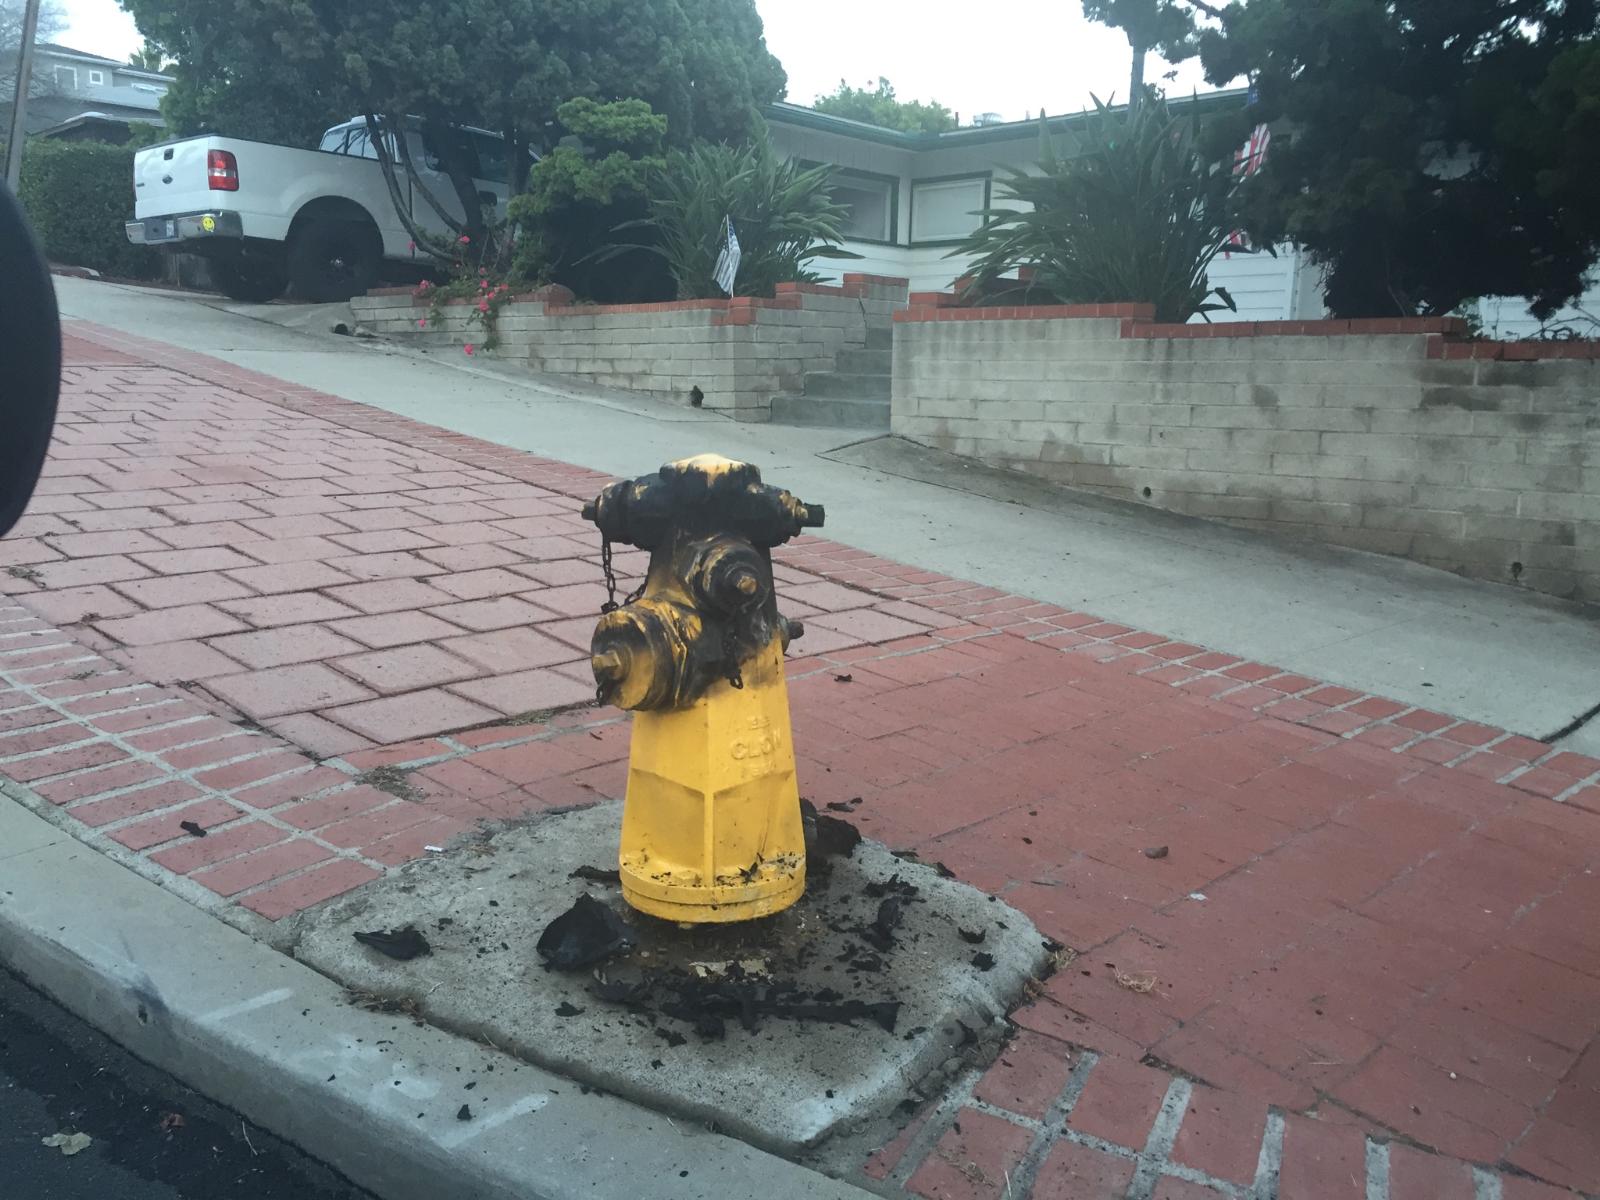 Fire hydrant struck by lighting.